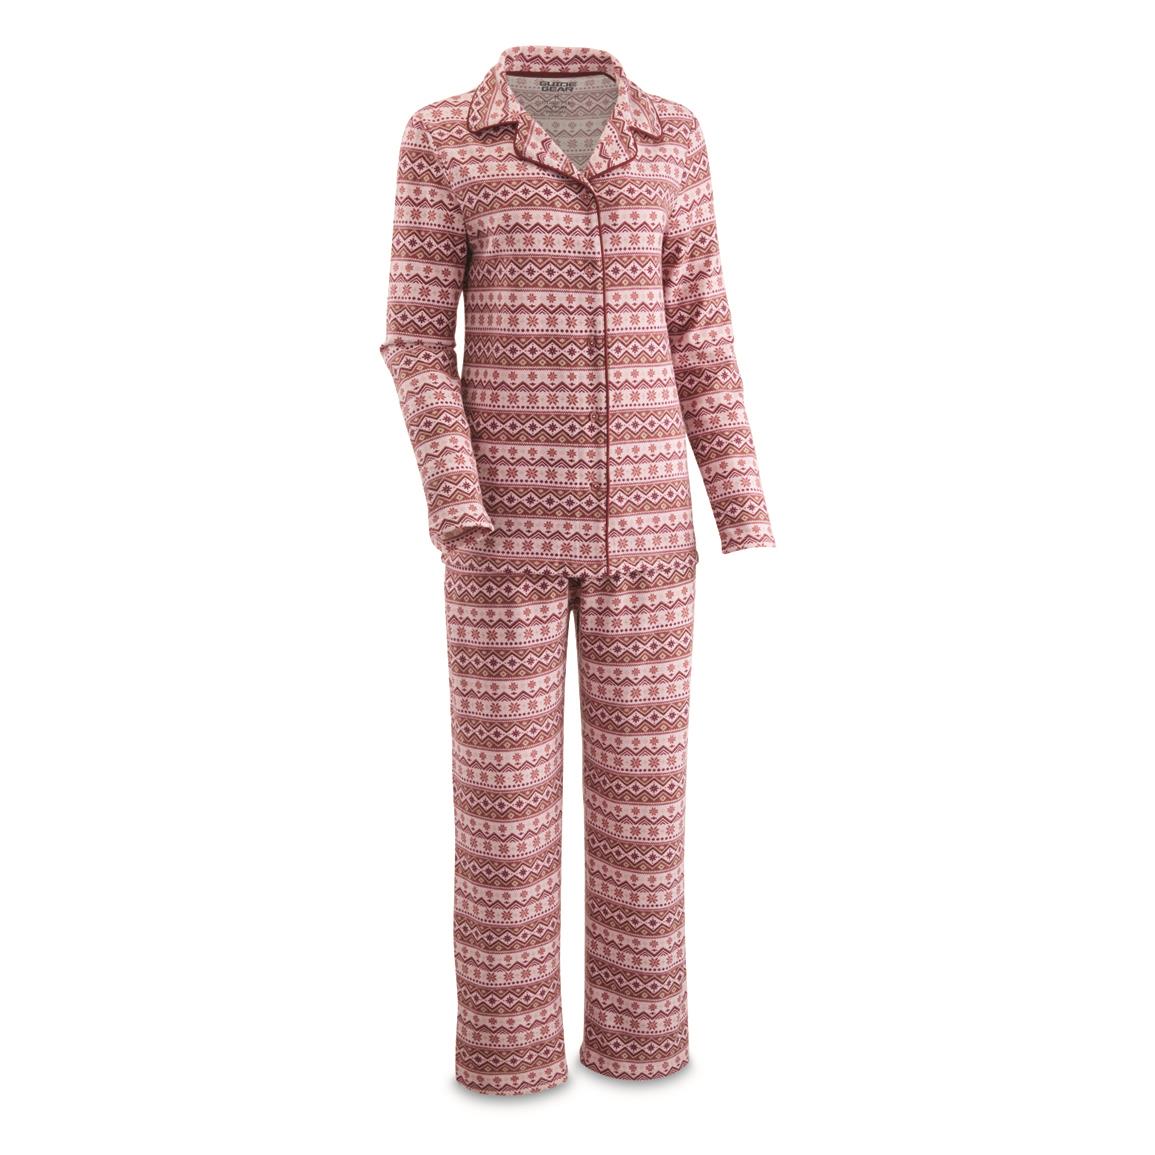 Mobile Warming Women's Merino Heated Baselayer Top - 739148, Base Layers &  Pajamas at Sportsman's Guide